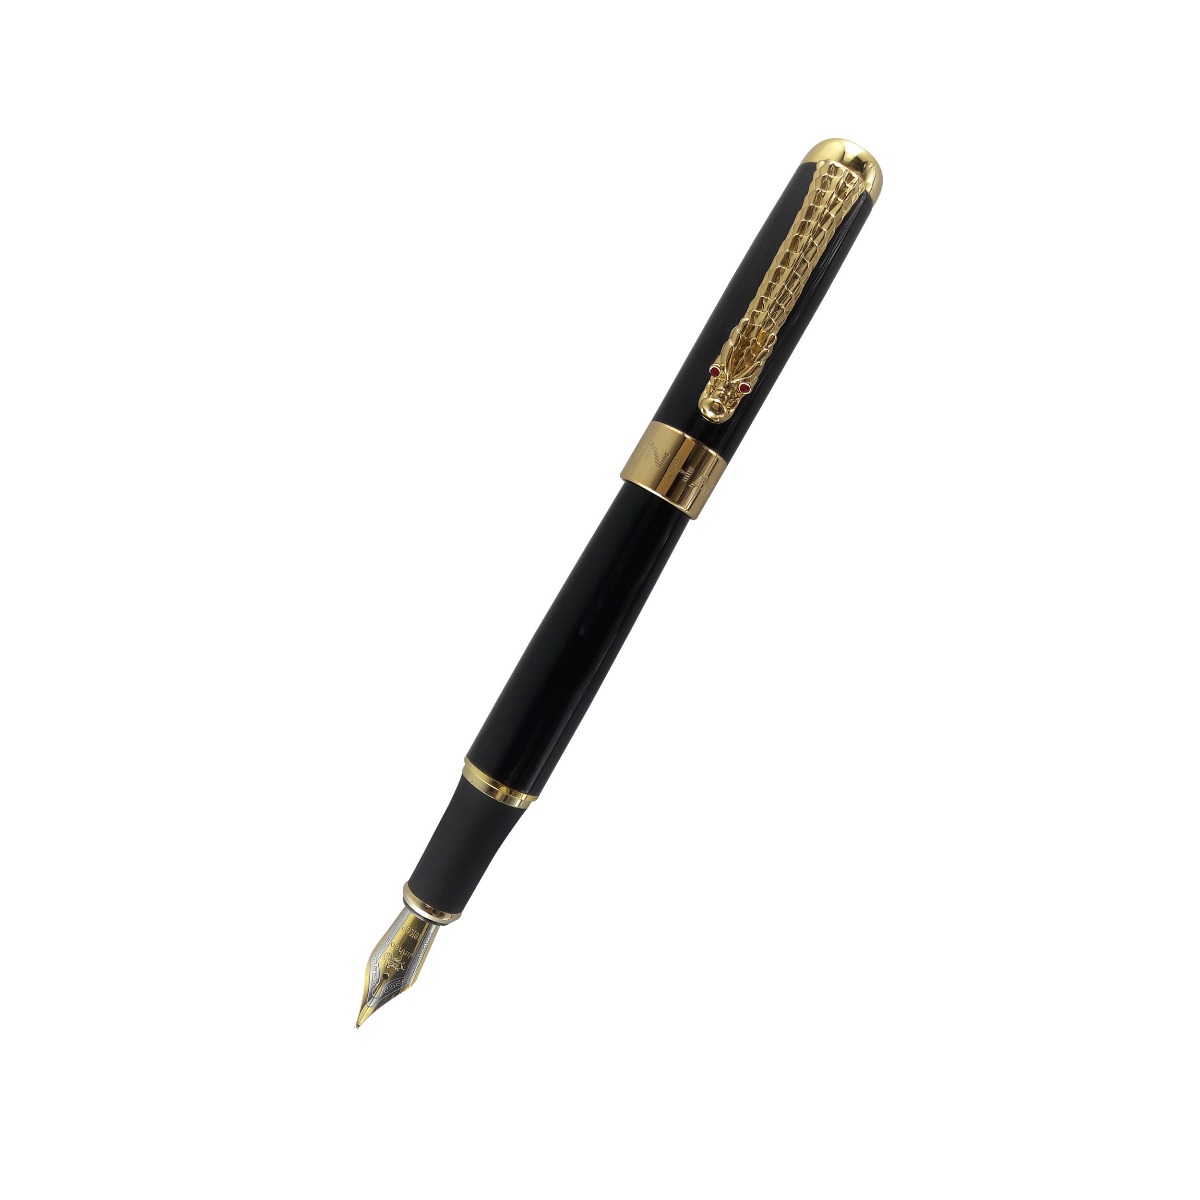 Jinhao 1200 Model: 12079 Black color body with golden color dragon clip medium tip cap type fountain pen